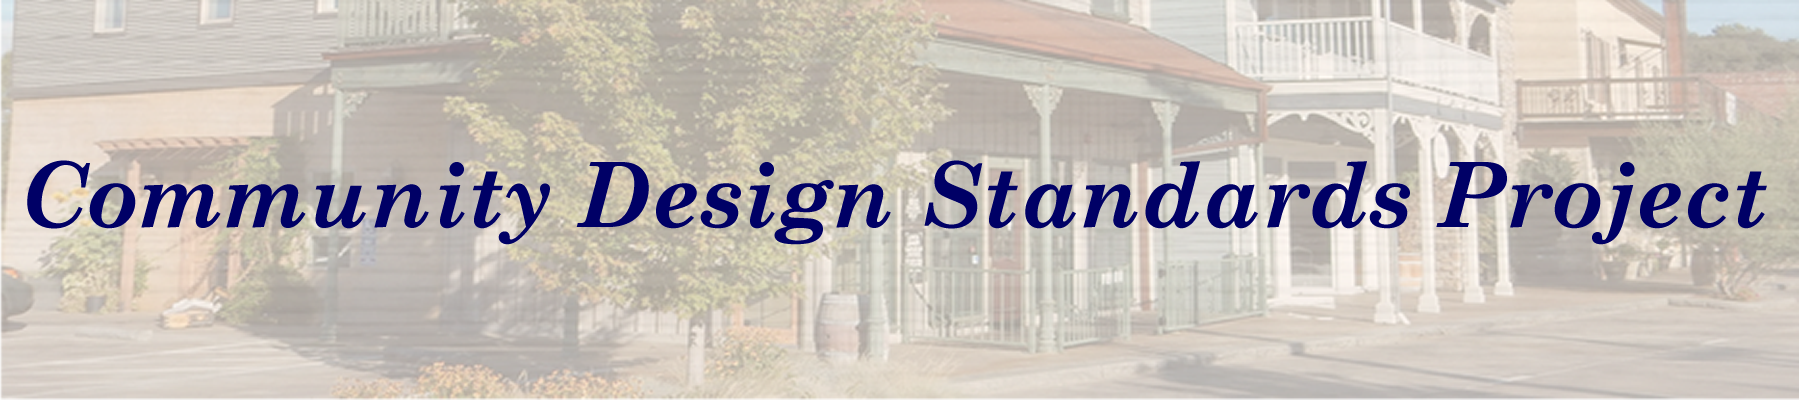 Community Design Standards Project